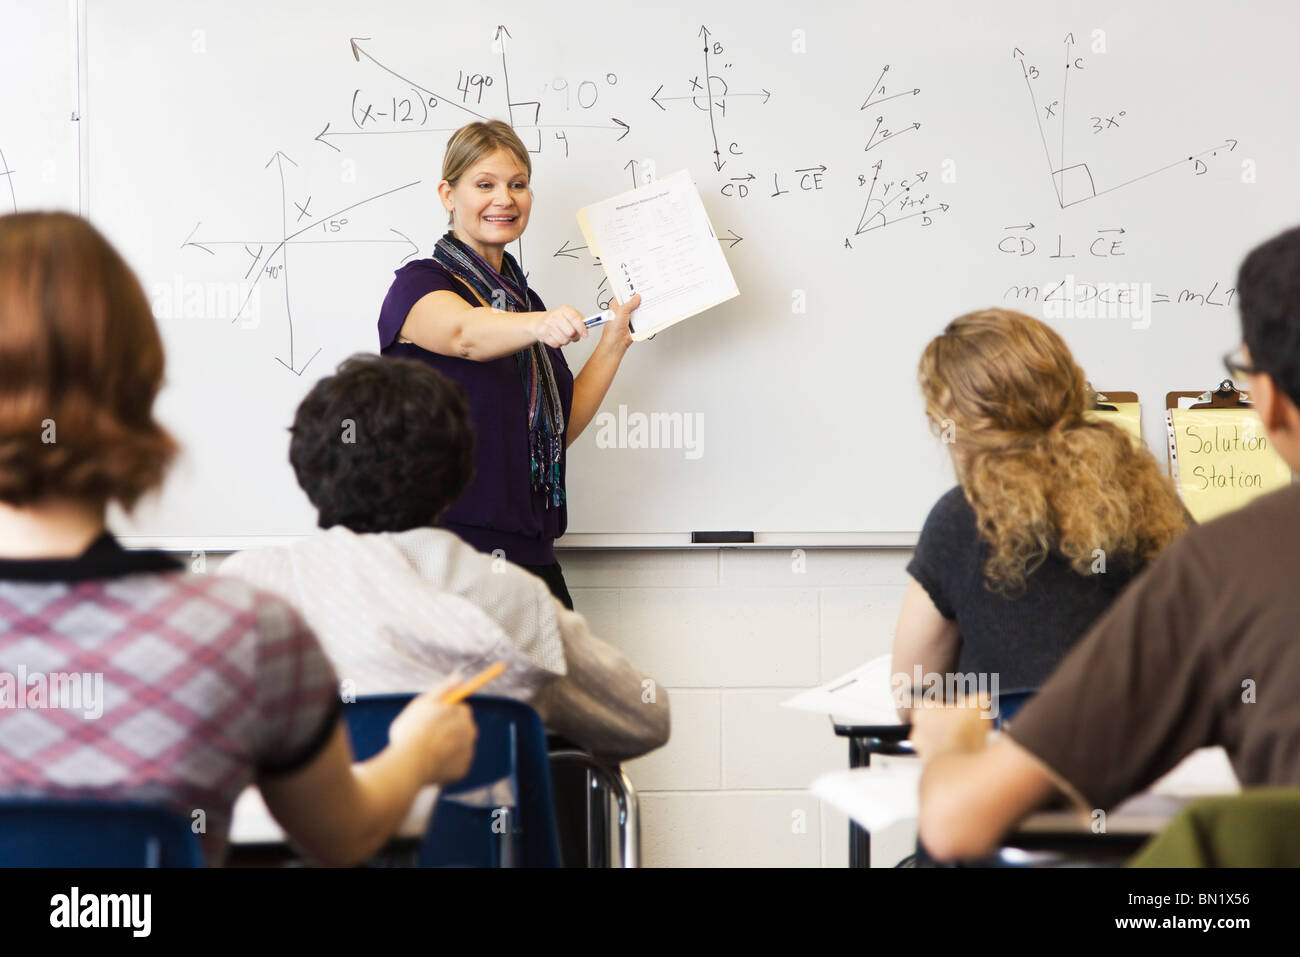 Woman teaching geometry class Stock Photo